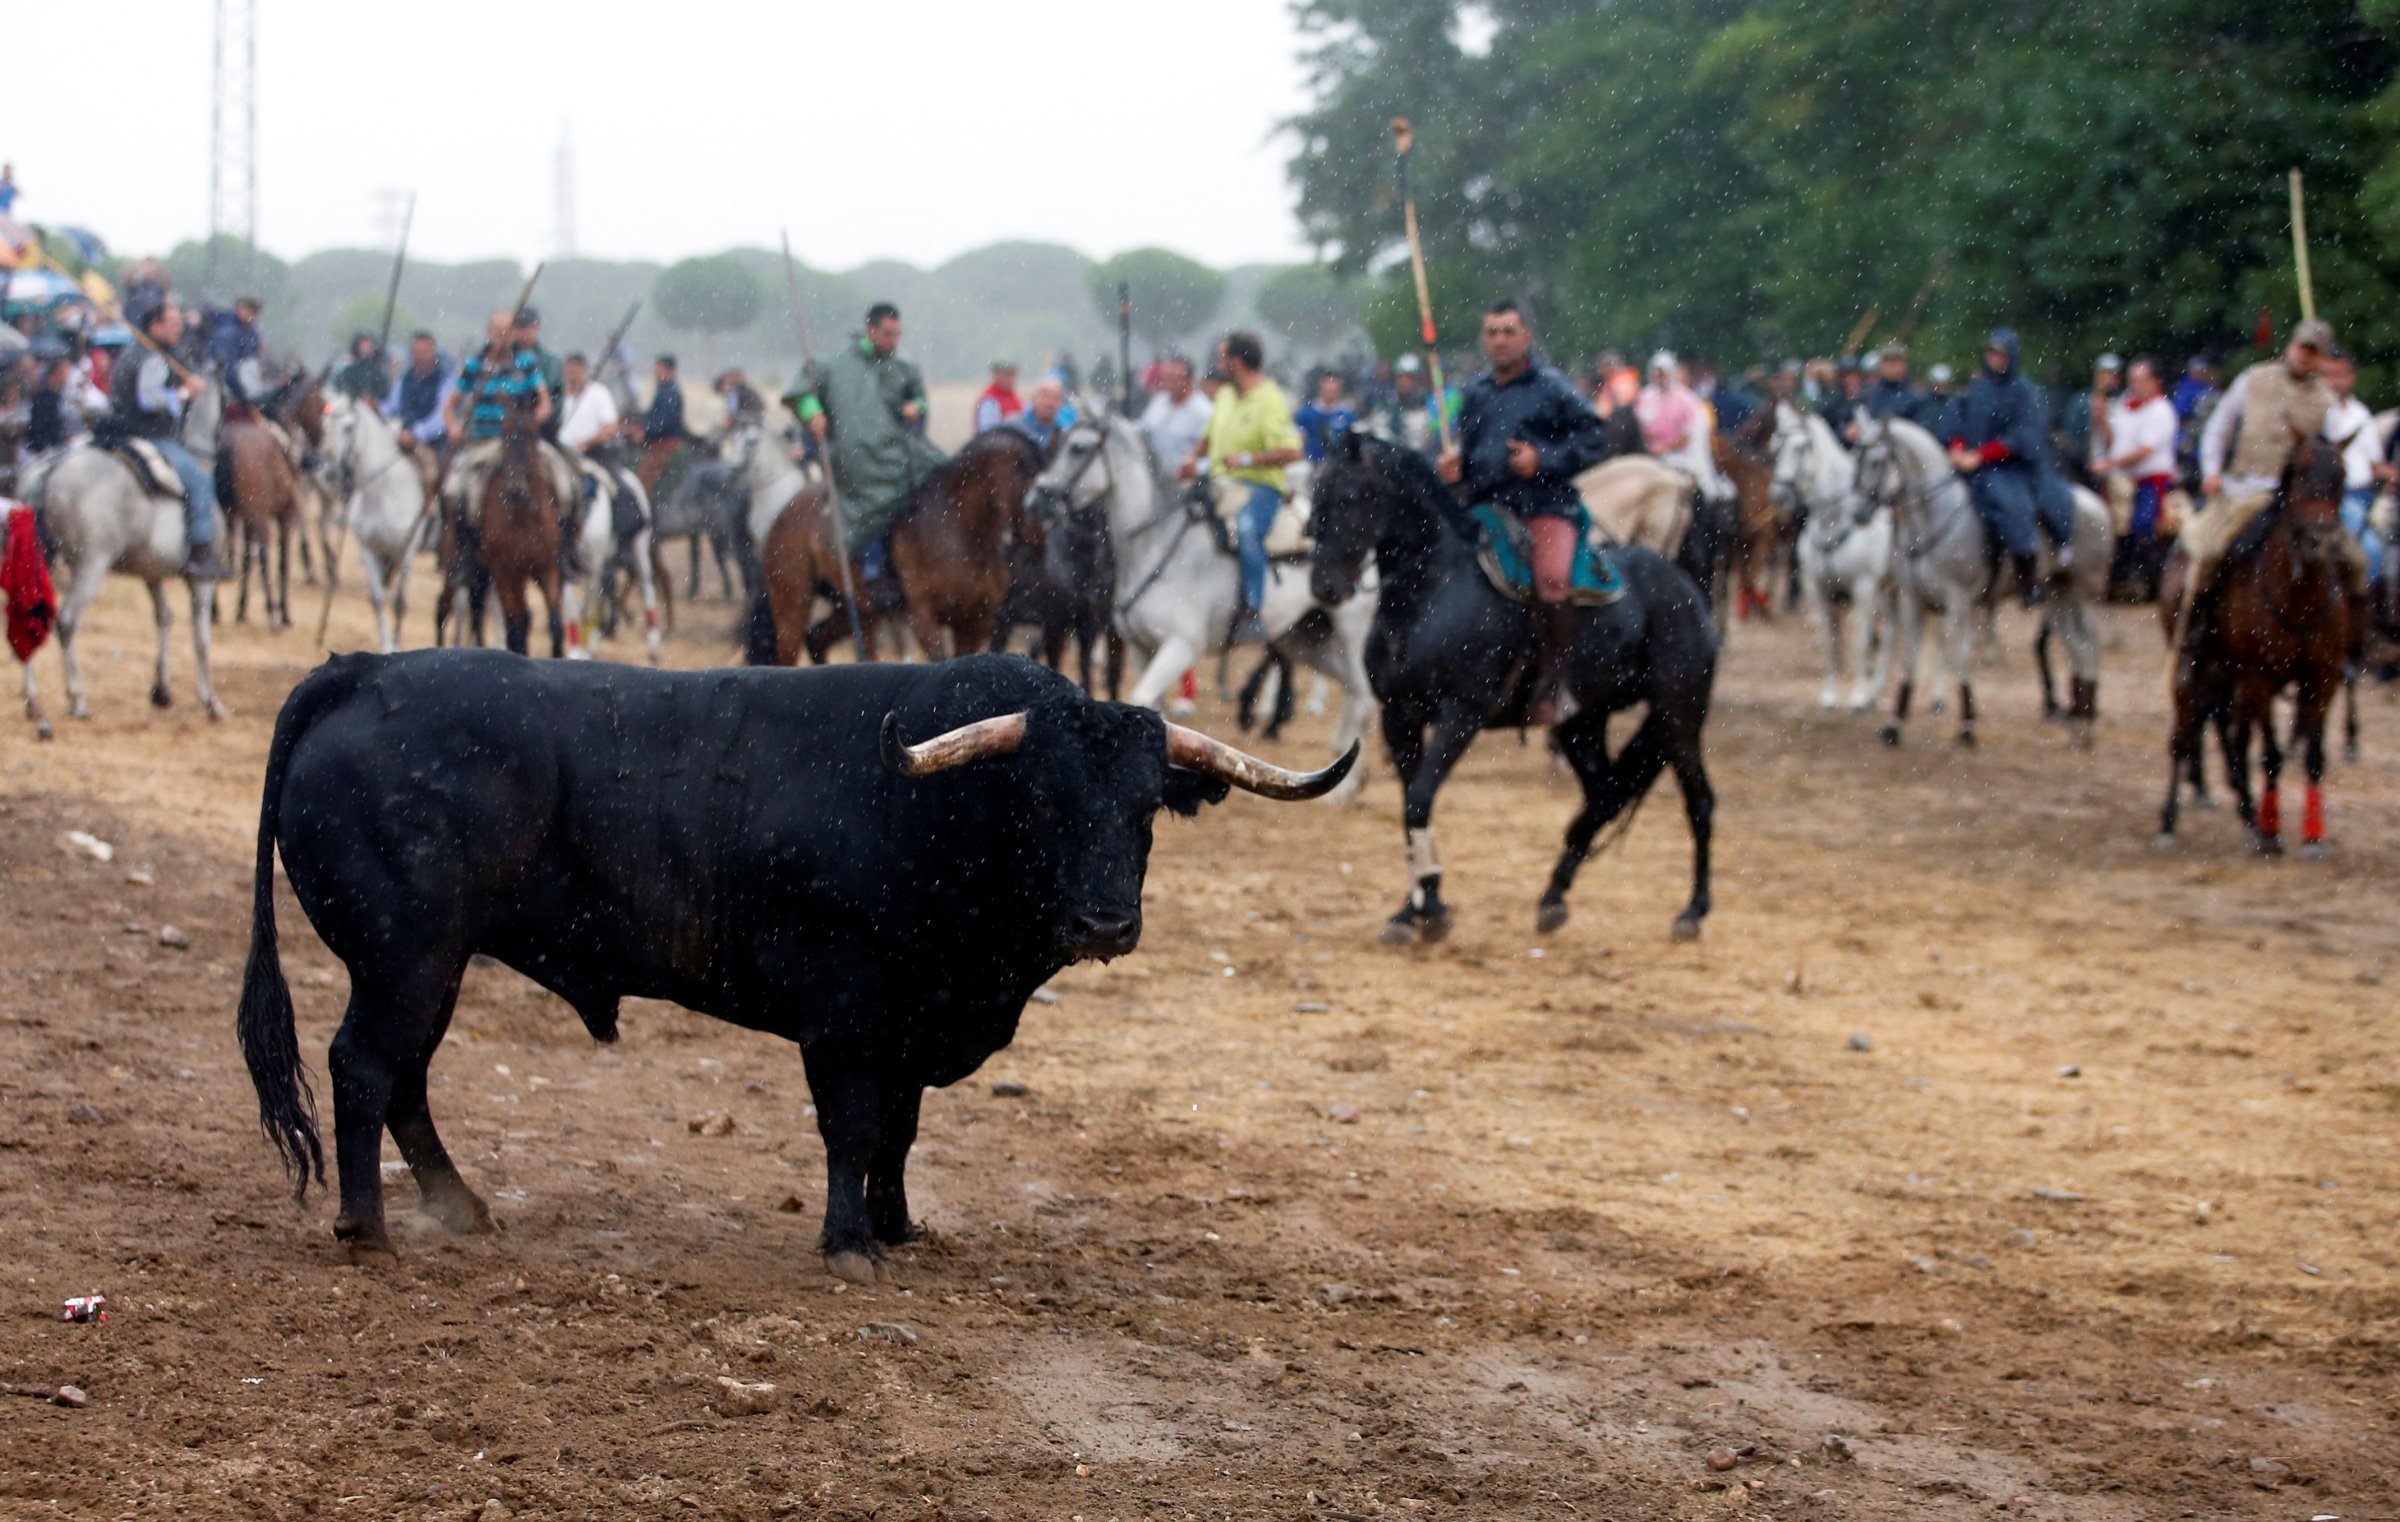 A bull, named "Pelado", stands beside horsemen during the Toro de la Pena, formerly known as Toro de la Vega festival, in Tordesillas